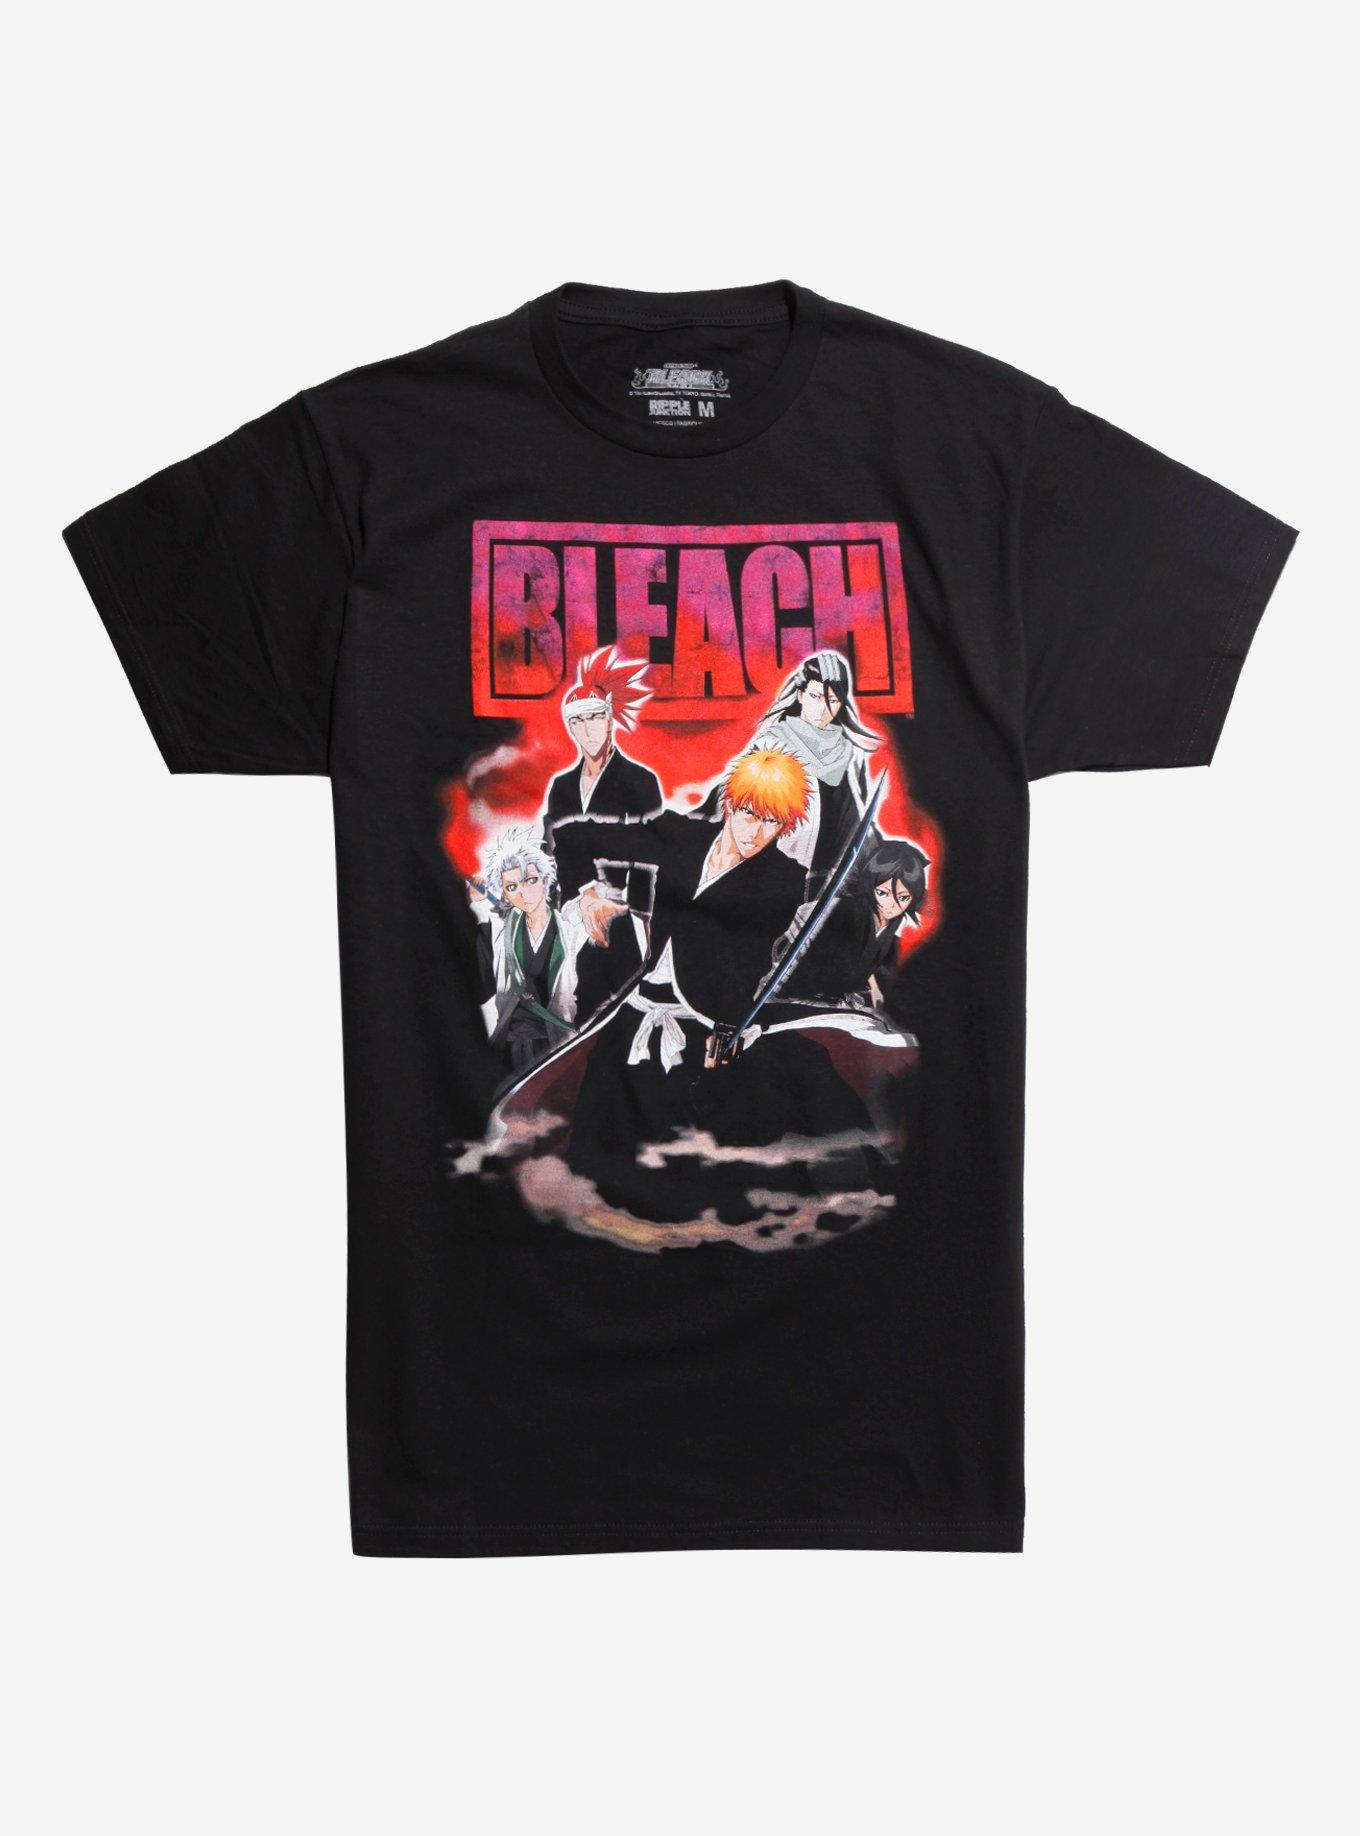 Bleach Characters Group T-Shirt, BLACK, hi-res